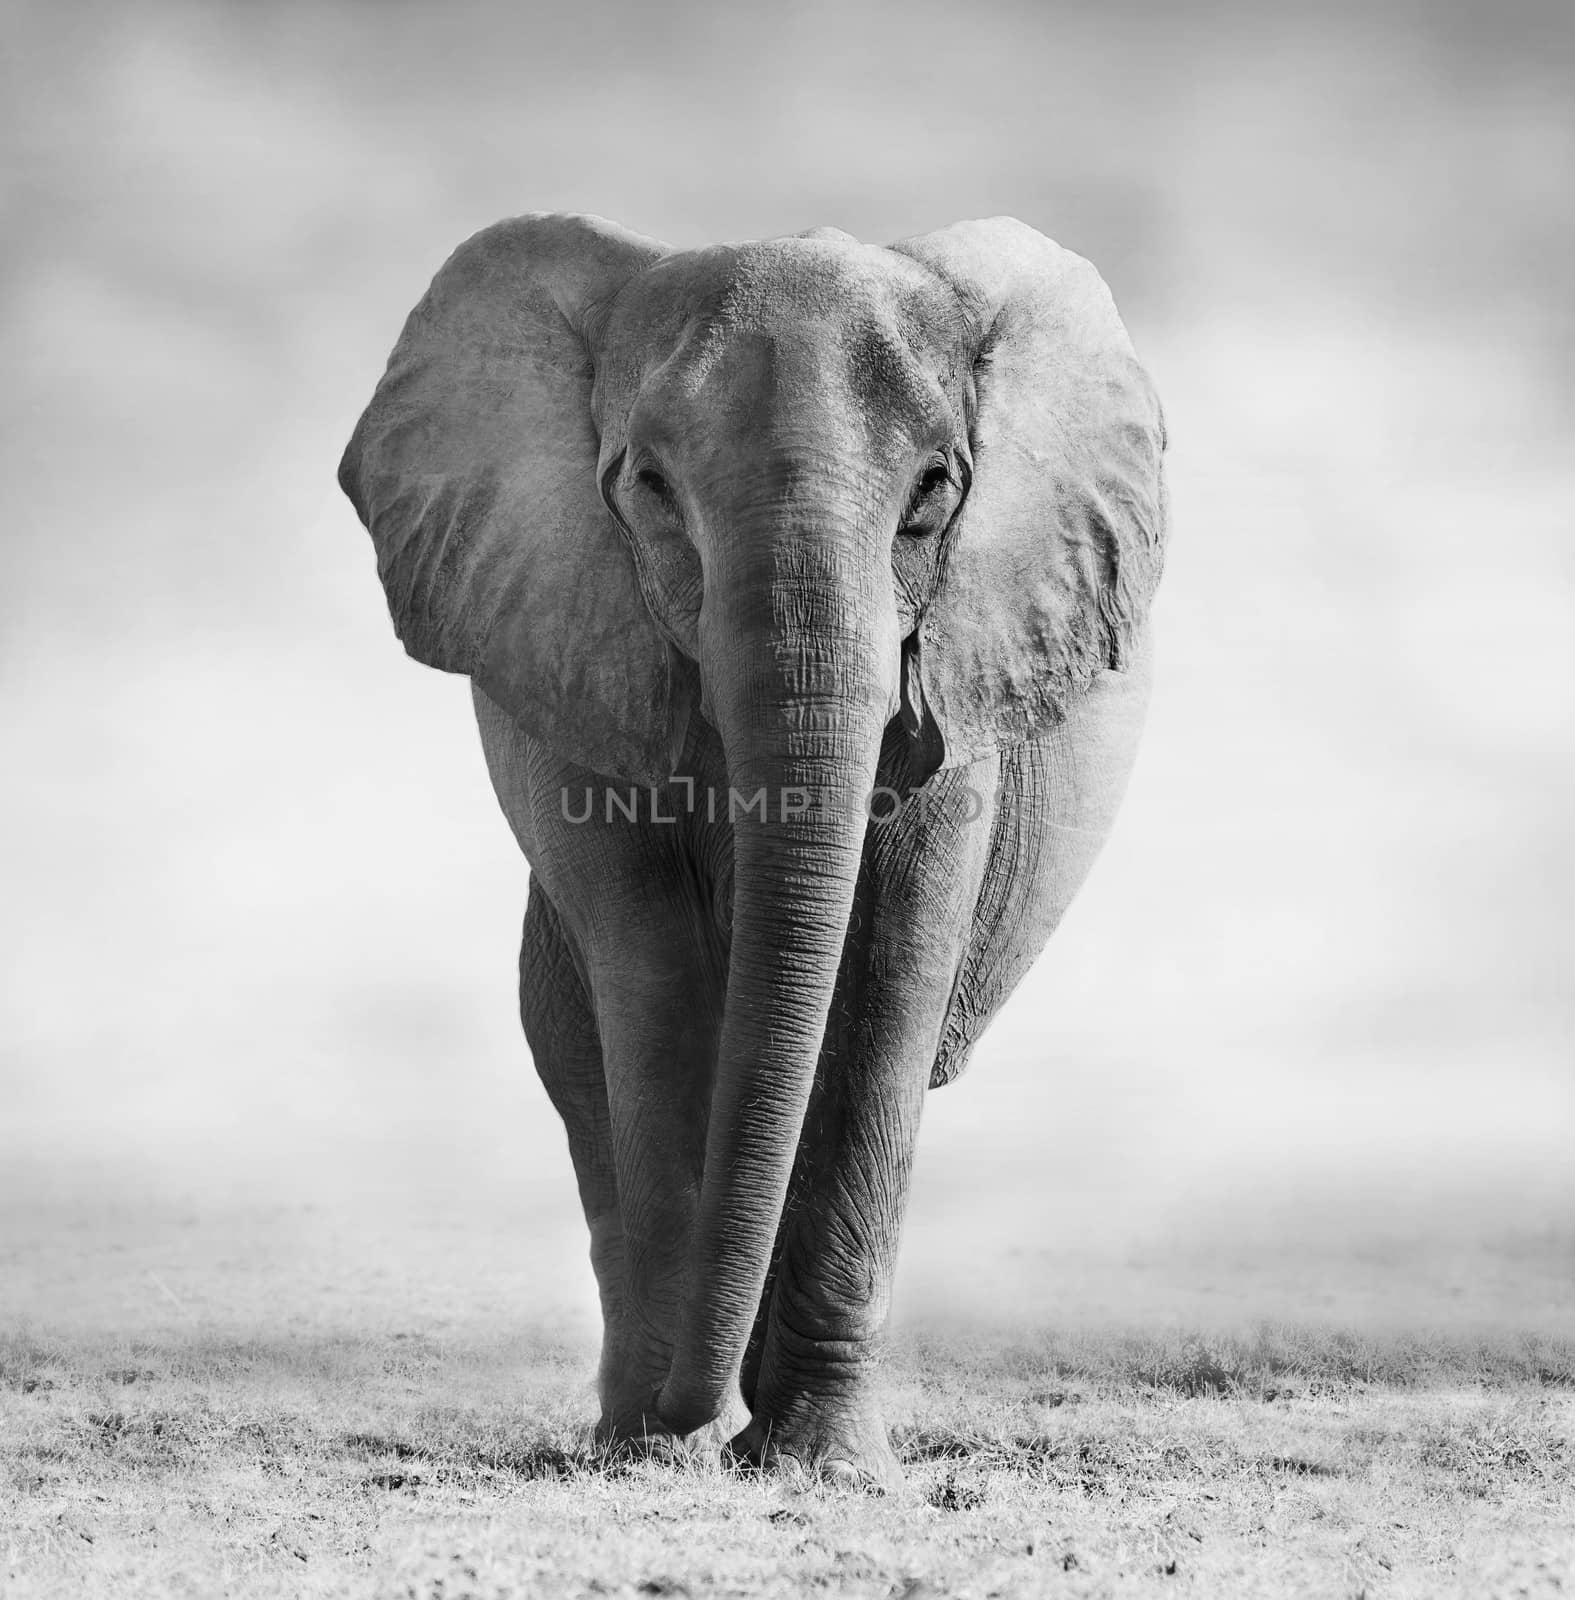 Artistic edit of an African elephant walking across the African savannah